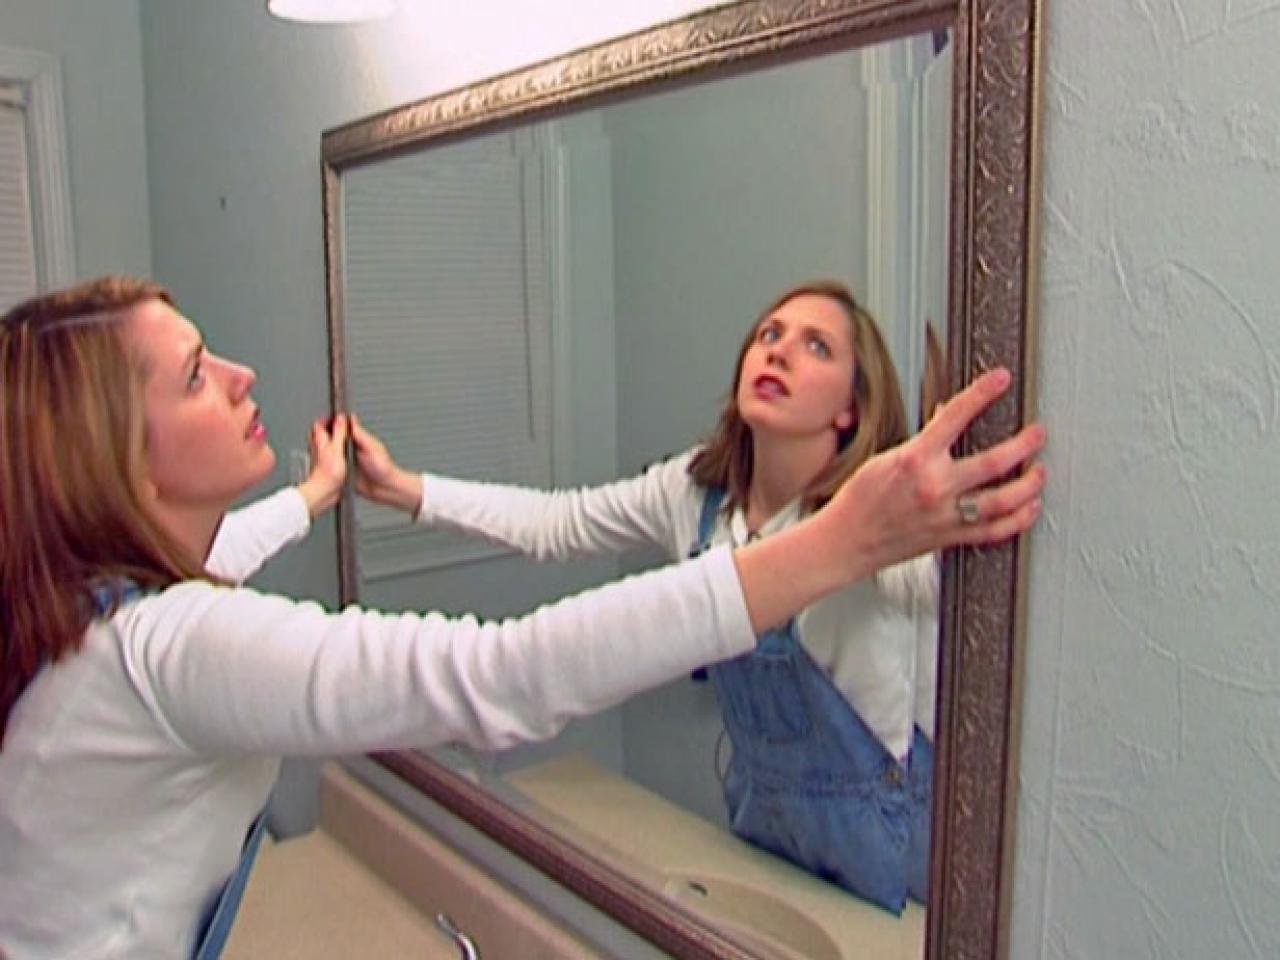 How to Install a Bathroom Mirror | how-tos | DIY